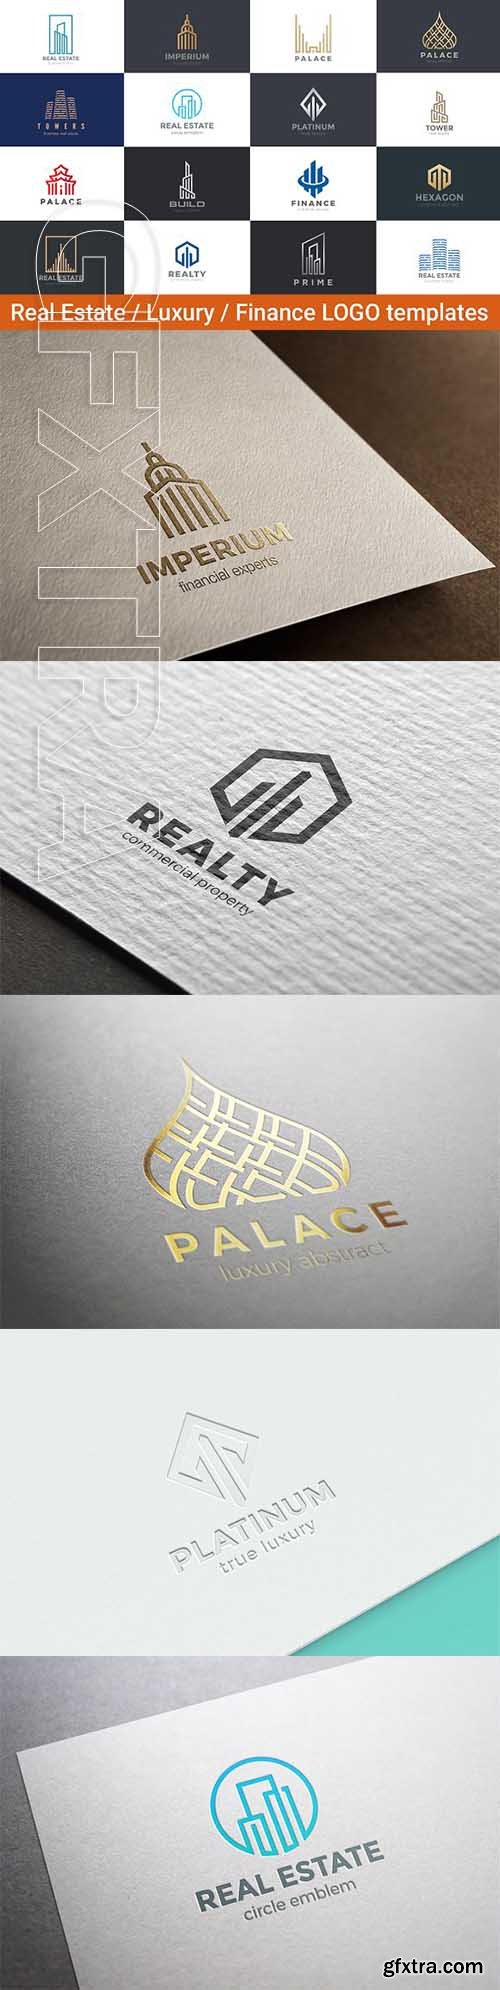 CreativeMarket - Real Estate Luxury Finance Logos 2197229